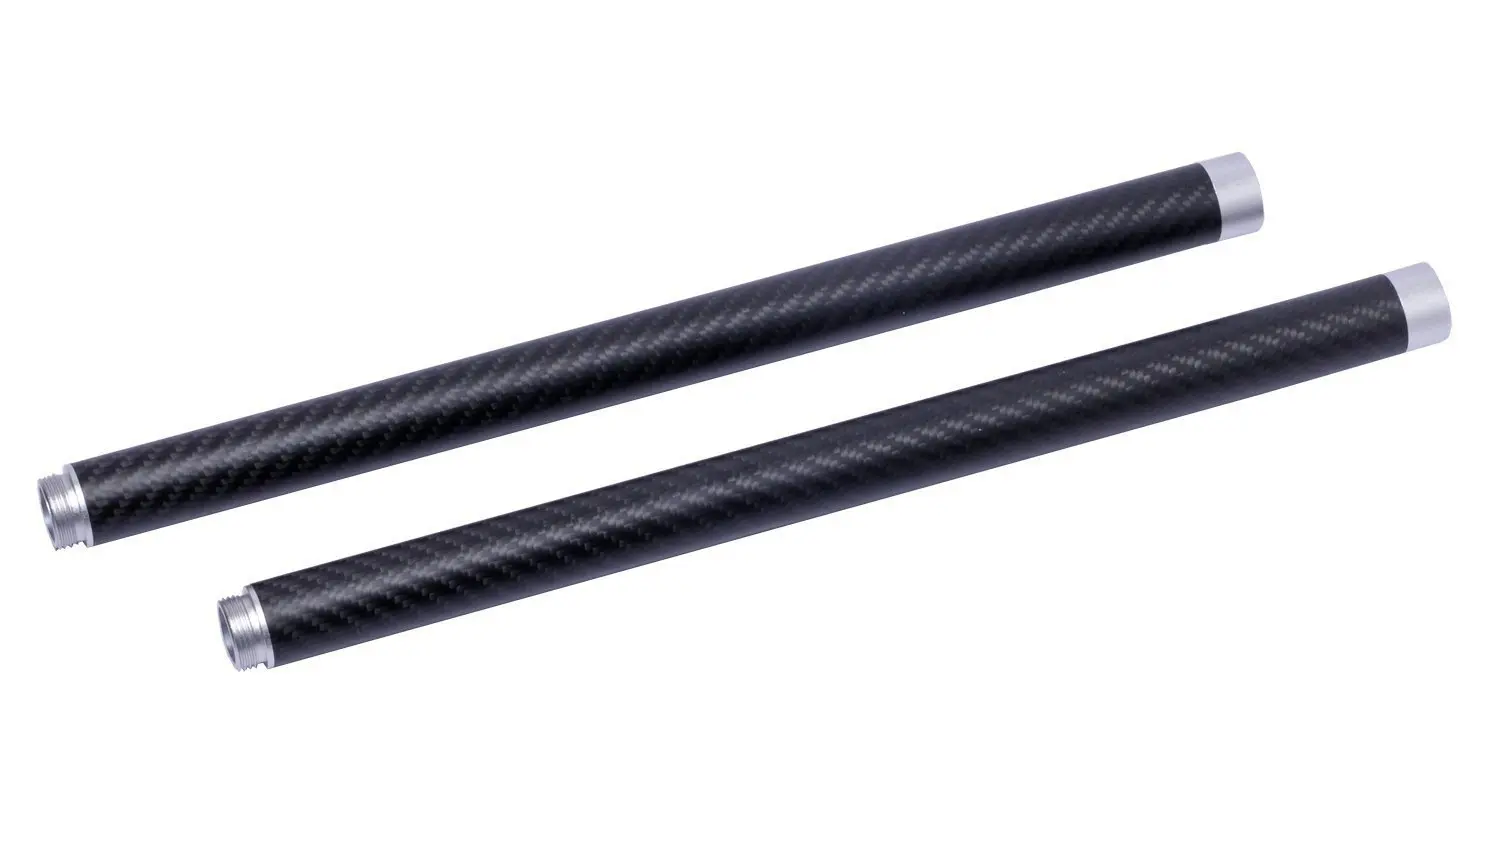 

F11226-2 2X Carbon Fiber Extention Reach Pole Rod Tube for Feiyu G5 G3 G4 FY-G3 Ultra / FY-G4 Handheld Gimbal Steady for Gopro